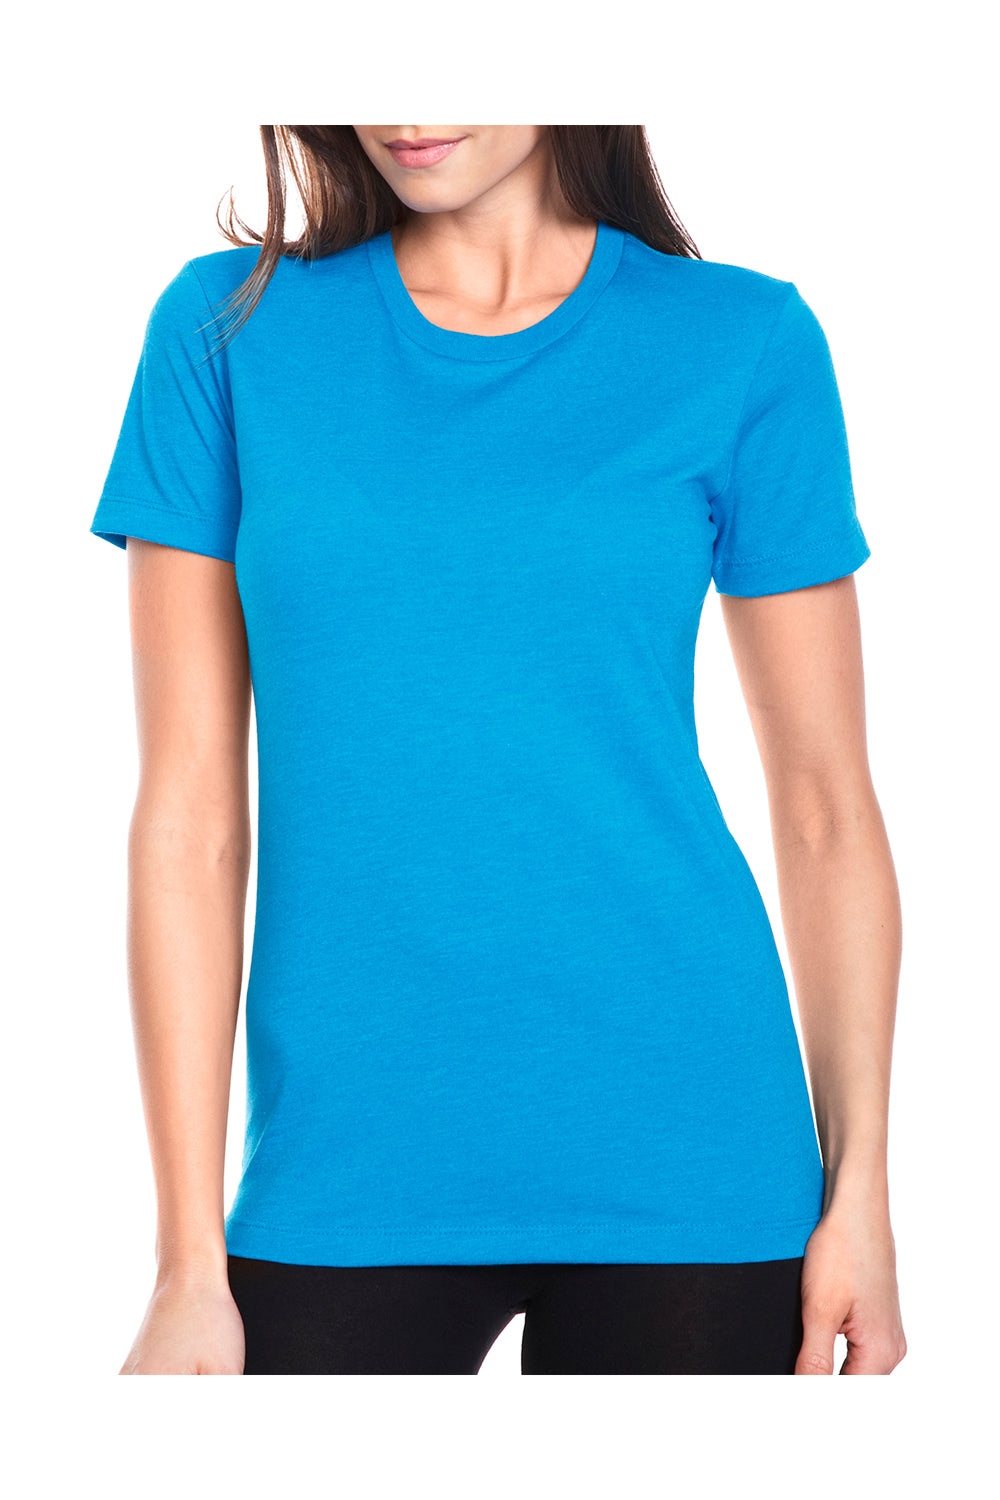 Next Level 6610 Womens CVC Jersey Short Sleeve Crewneck T-Shirt Turquoise Blue Front